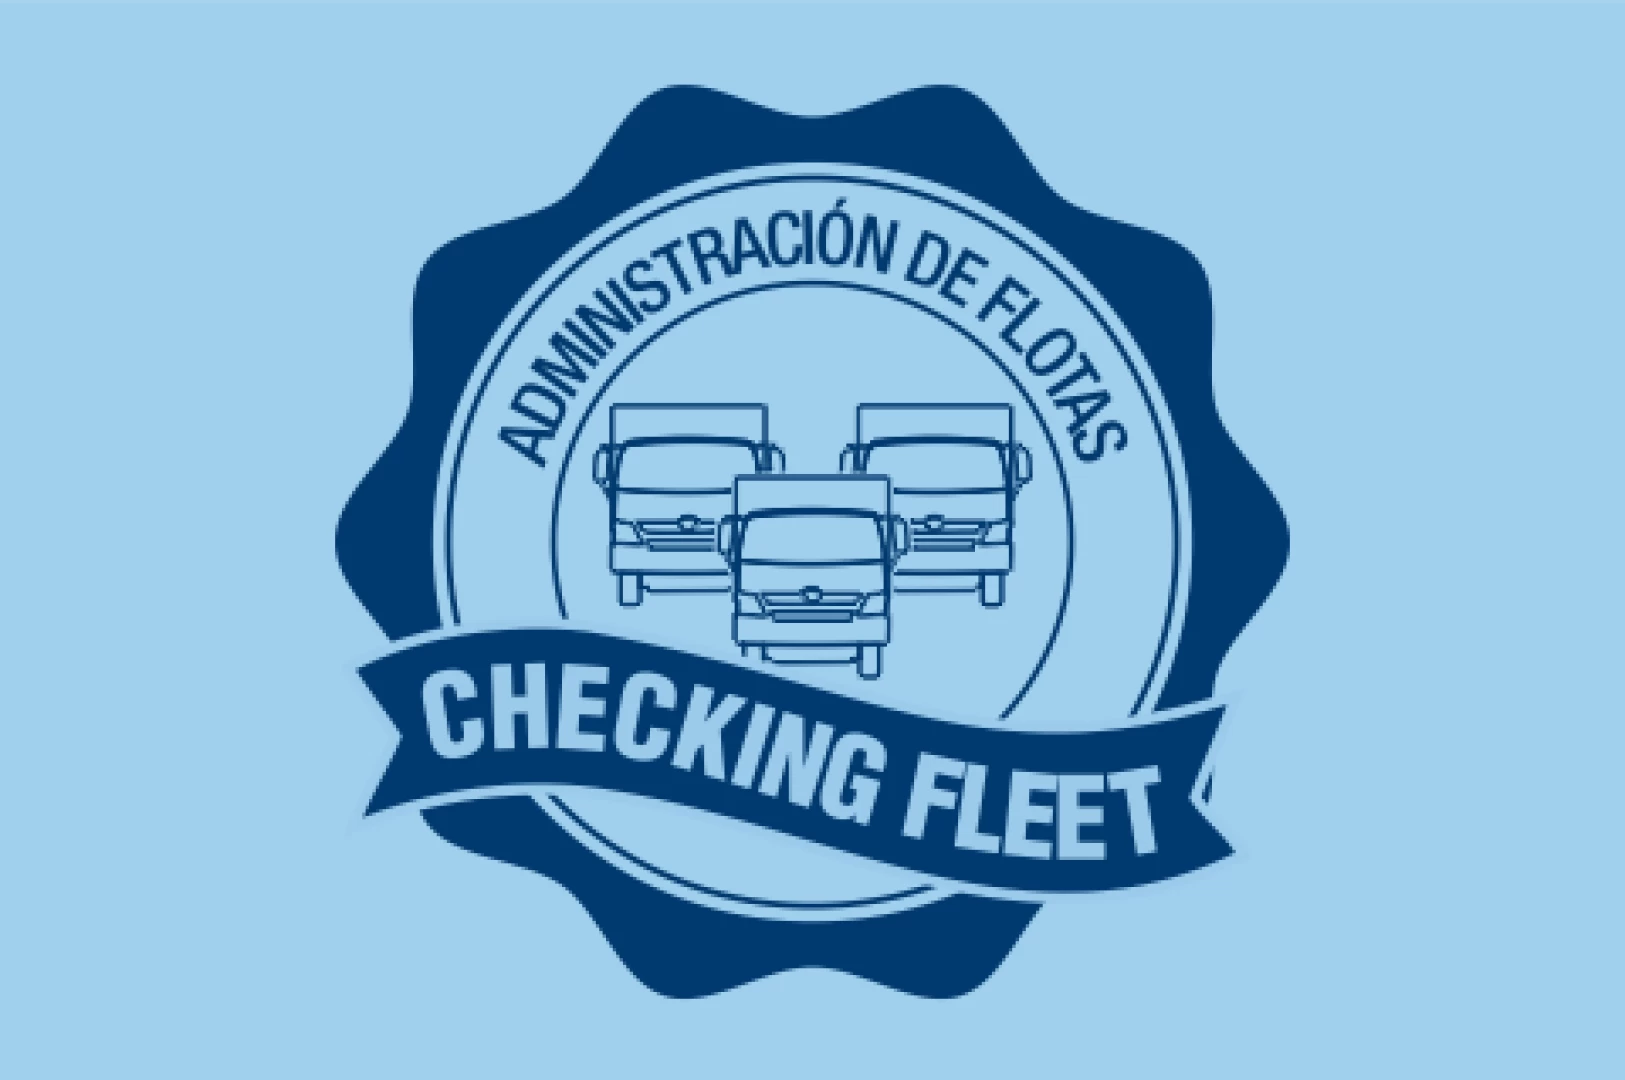 Checking fleet